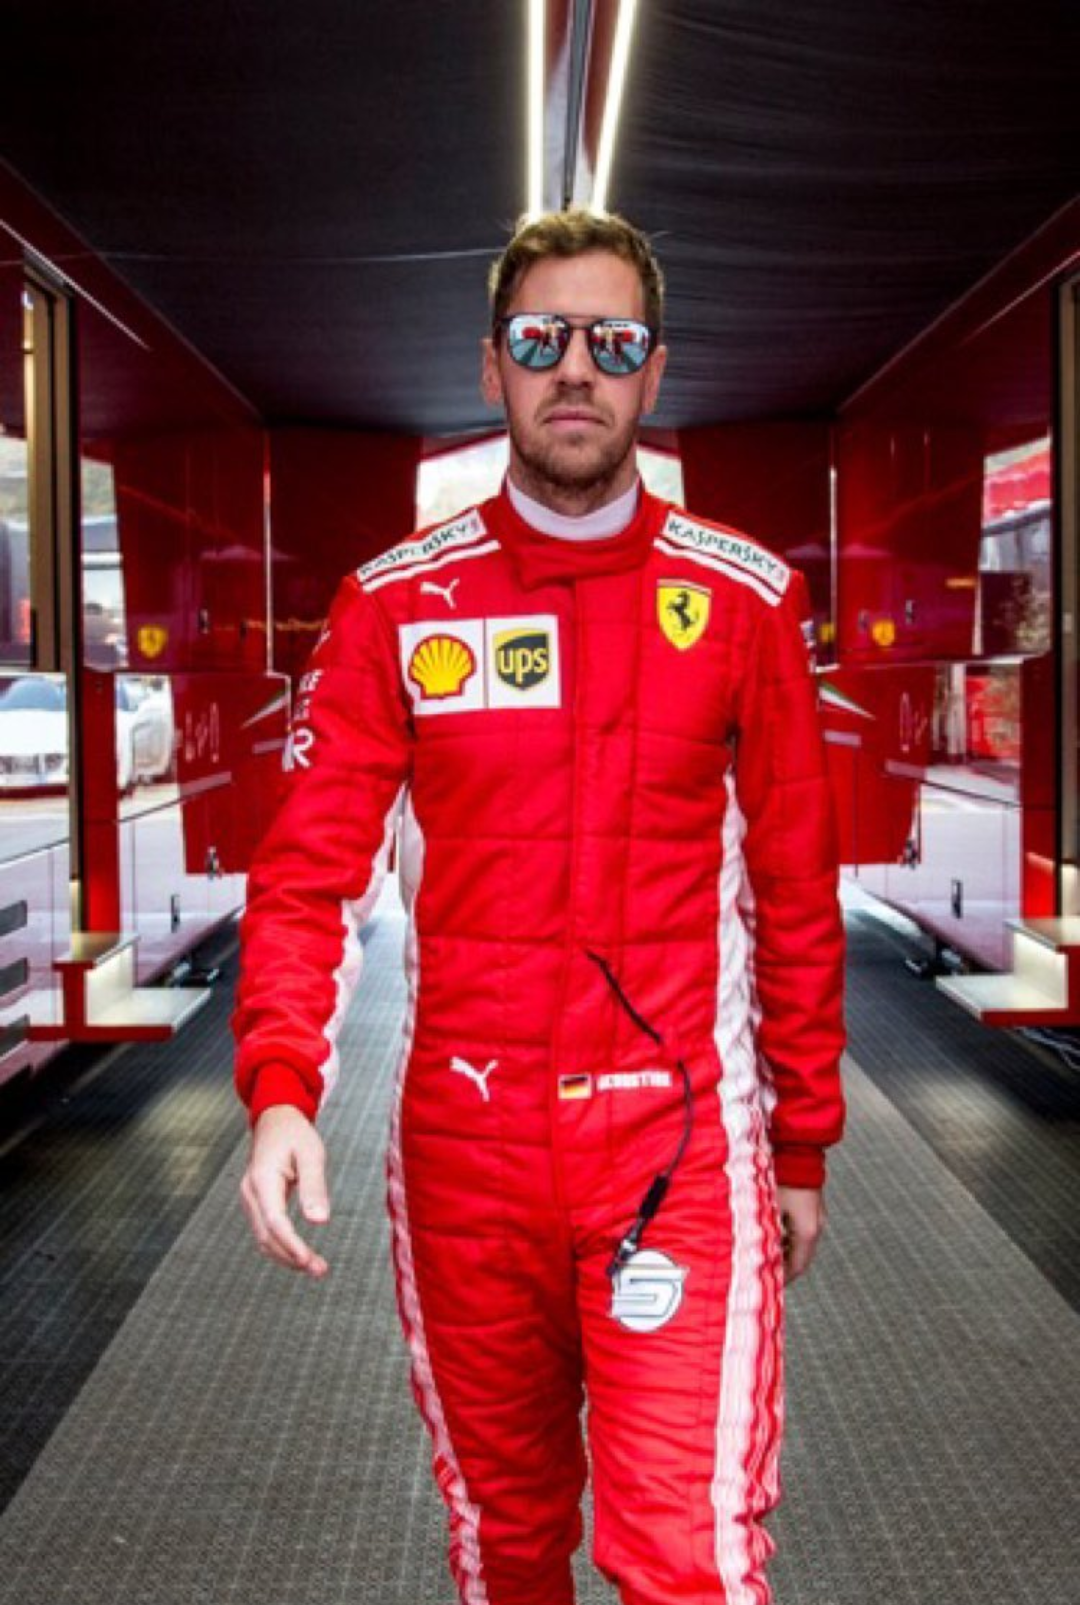 Forza Ferrari! — i-am-part-of-team-vettel: 📸 Ray-Ban